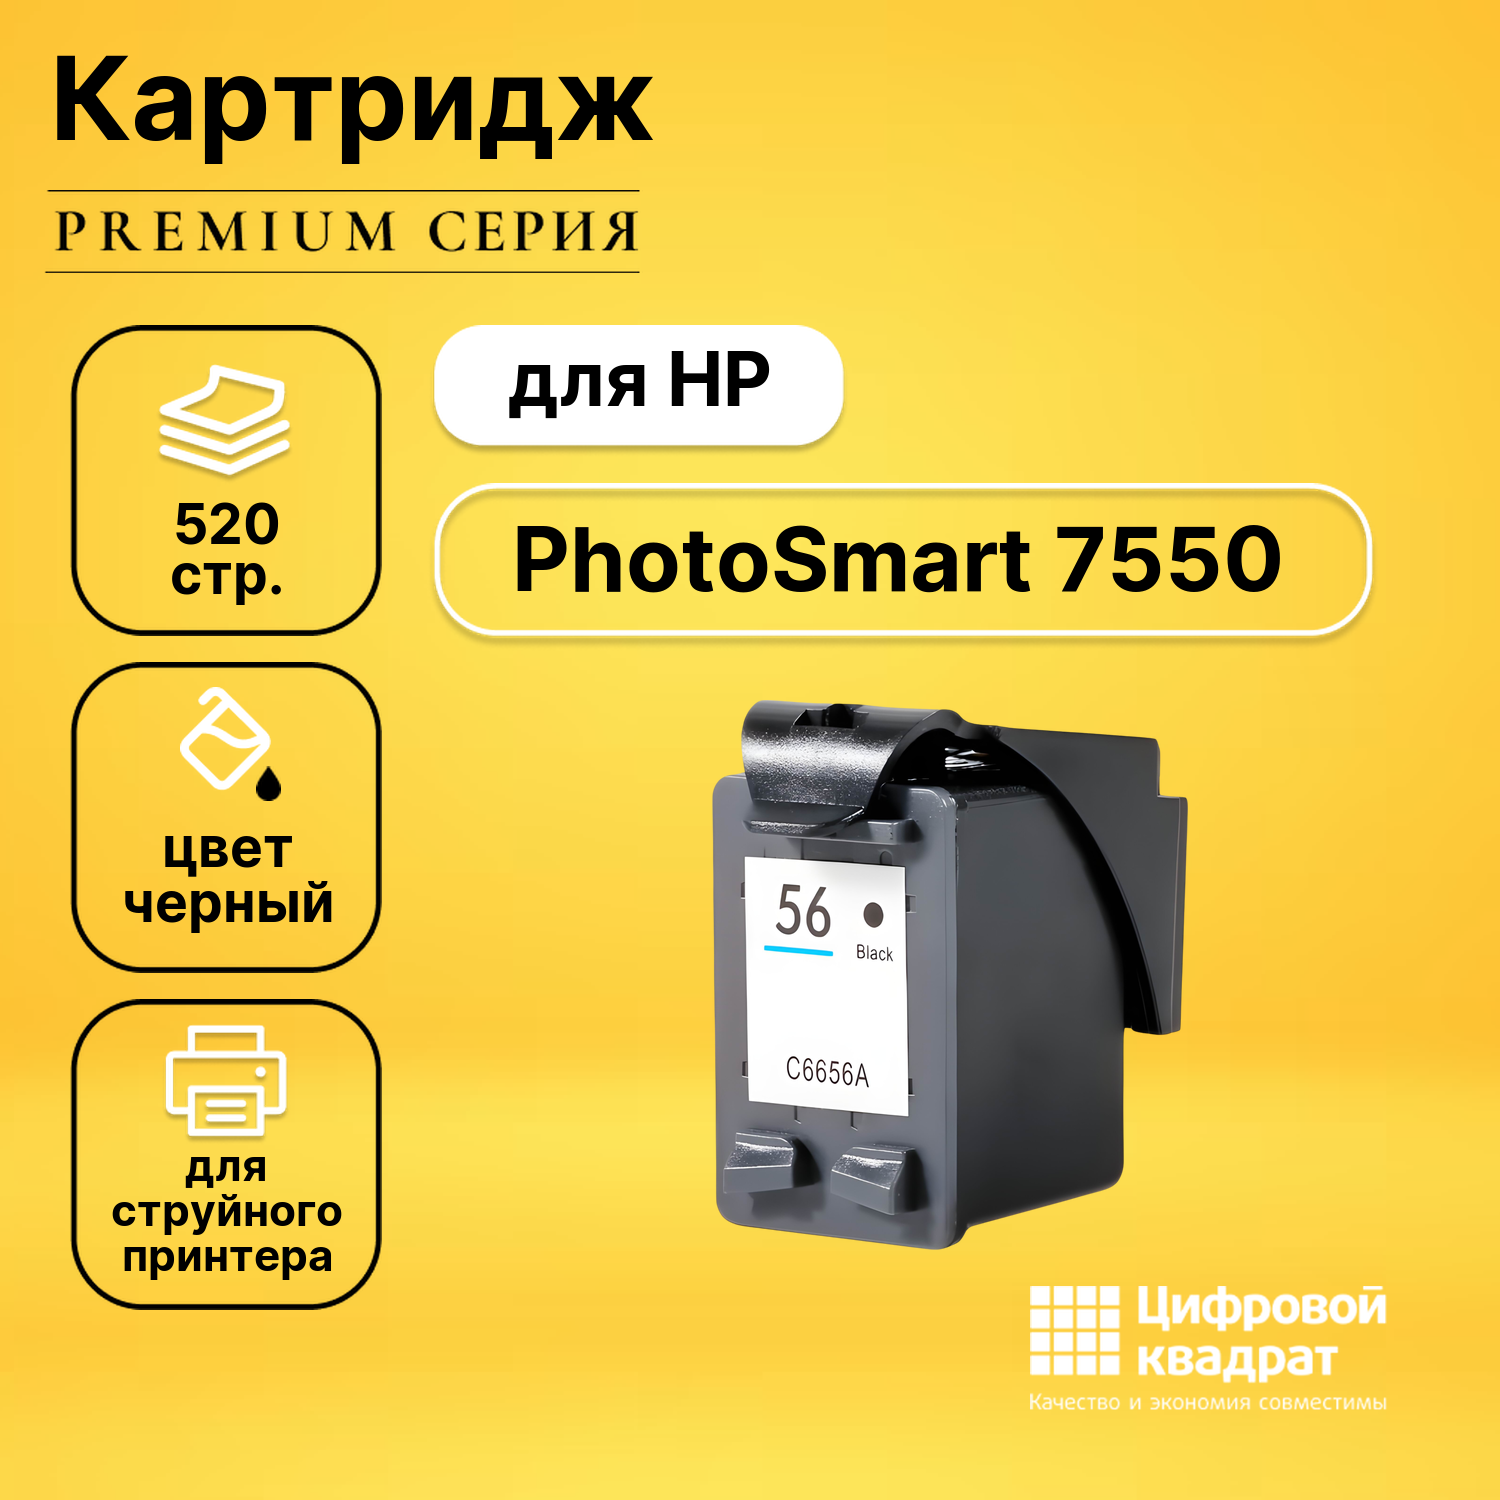 Картридж DS для HP PhotoSmart 7550 совместимый